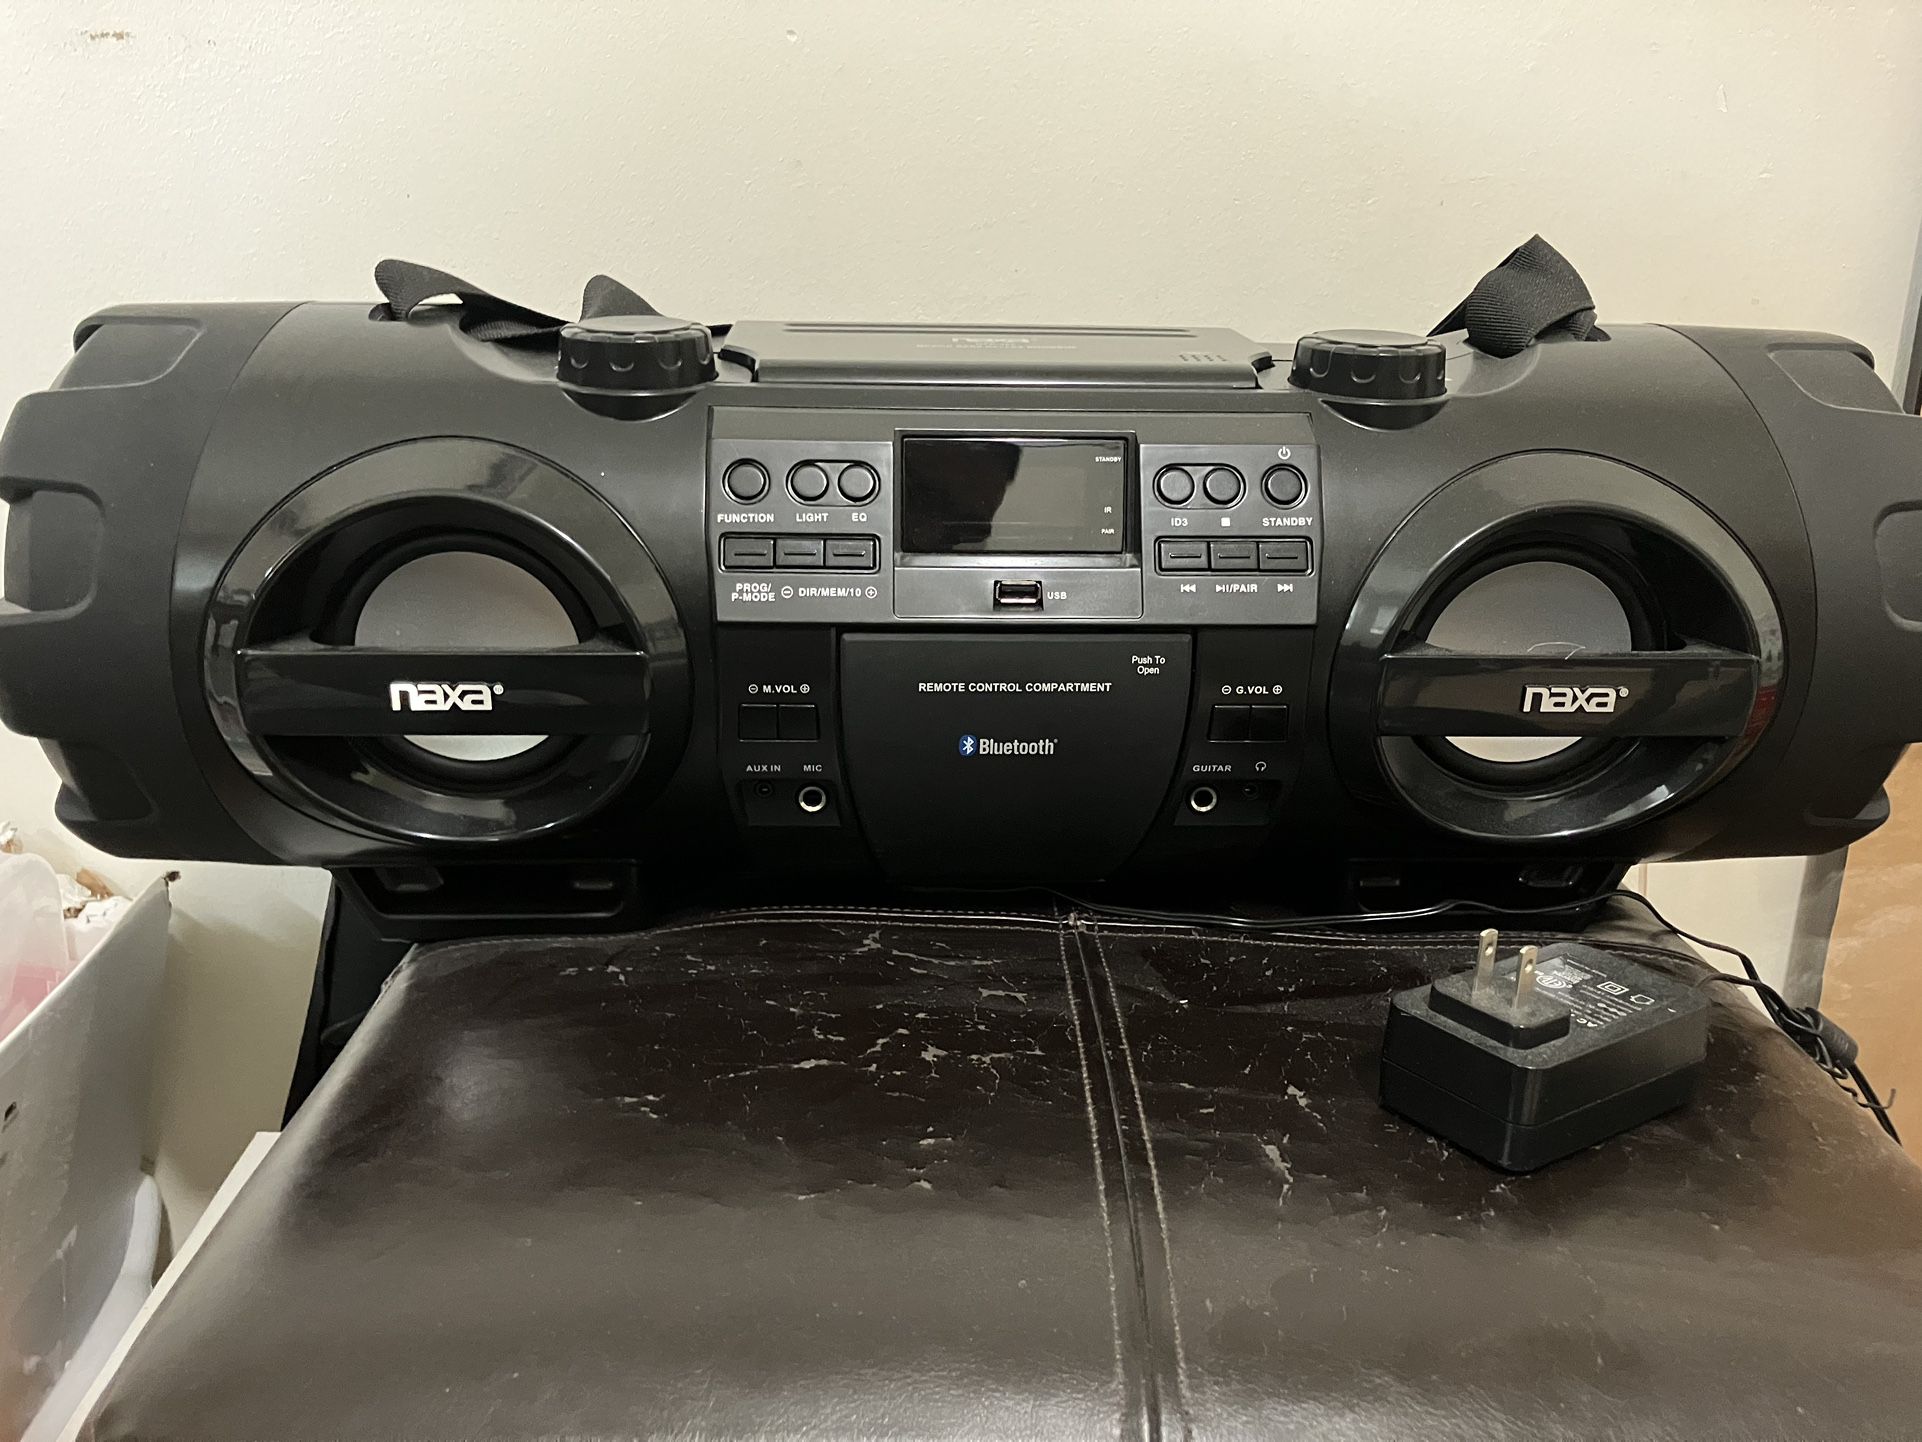 Radio Stereo: Brand Naxa, Bluetooth Stereo, 